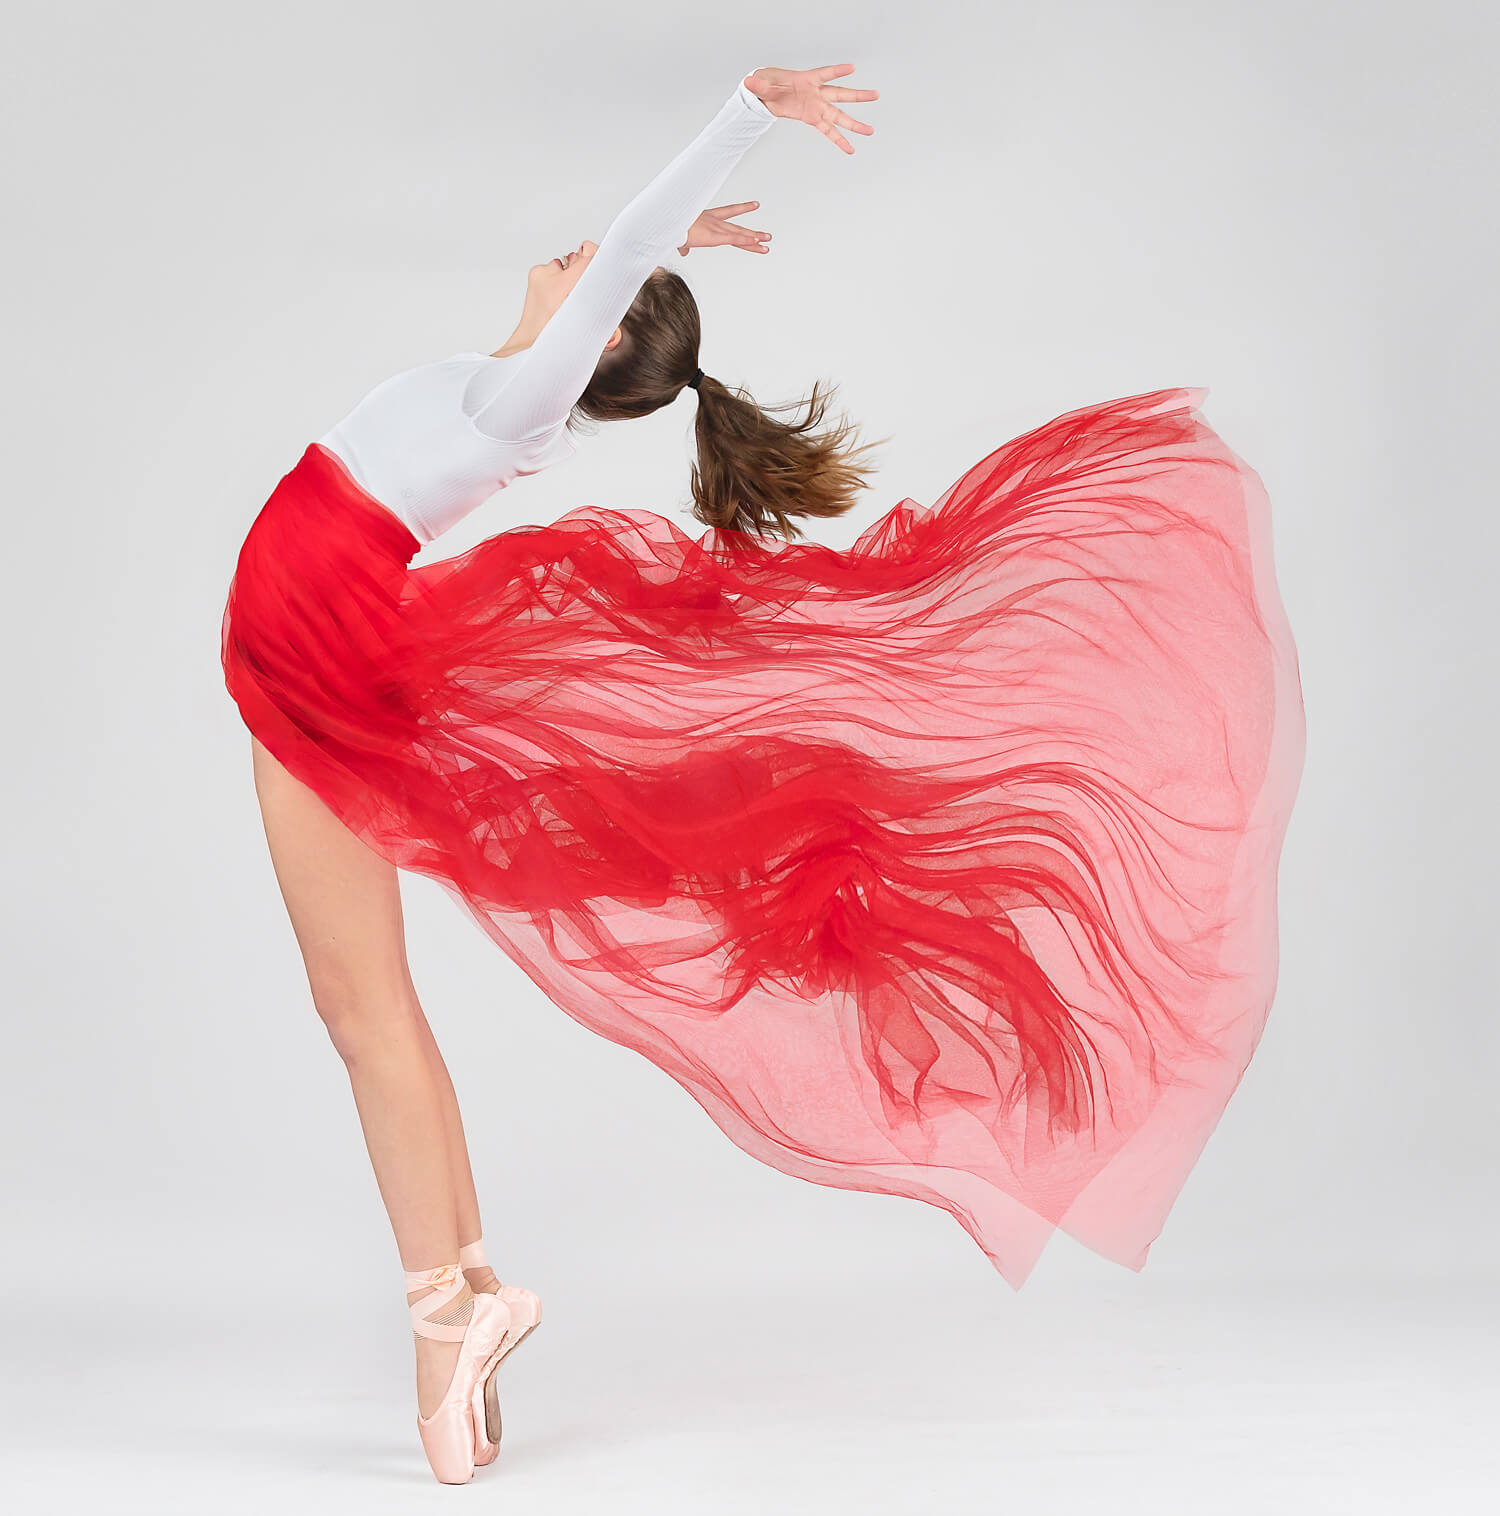 Courtney Clinton ballerina in red